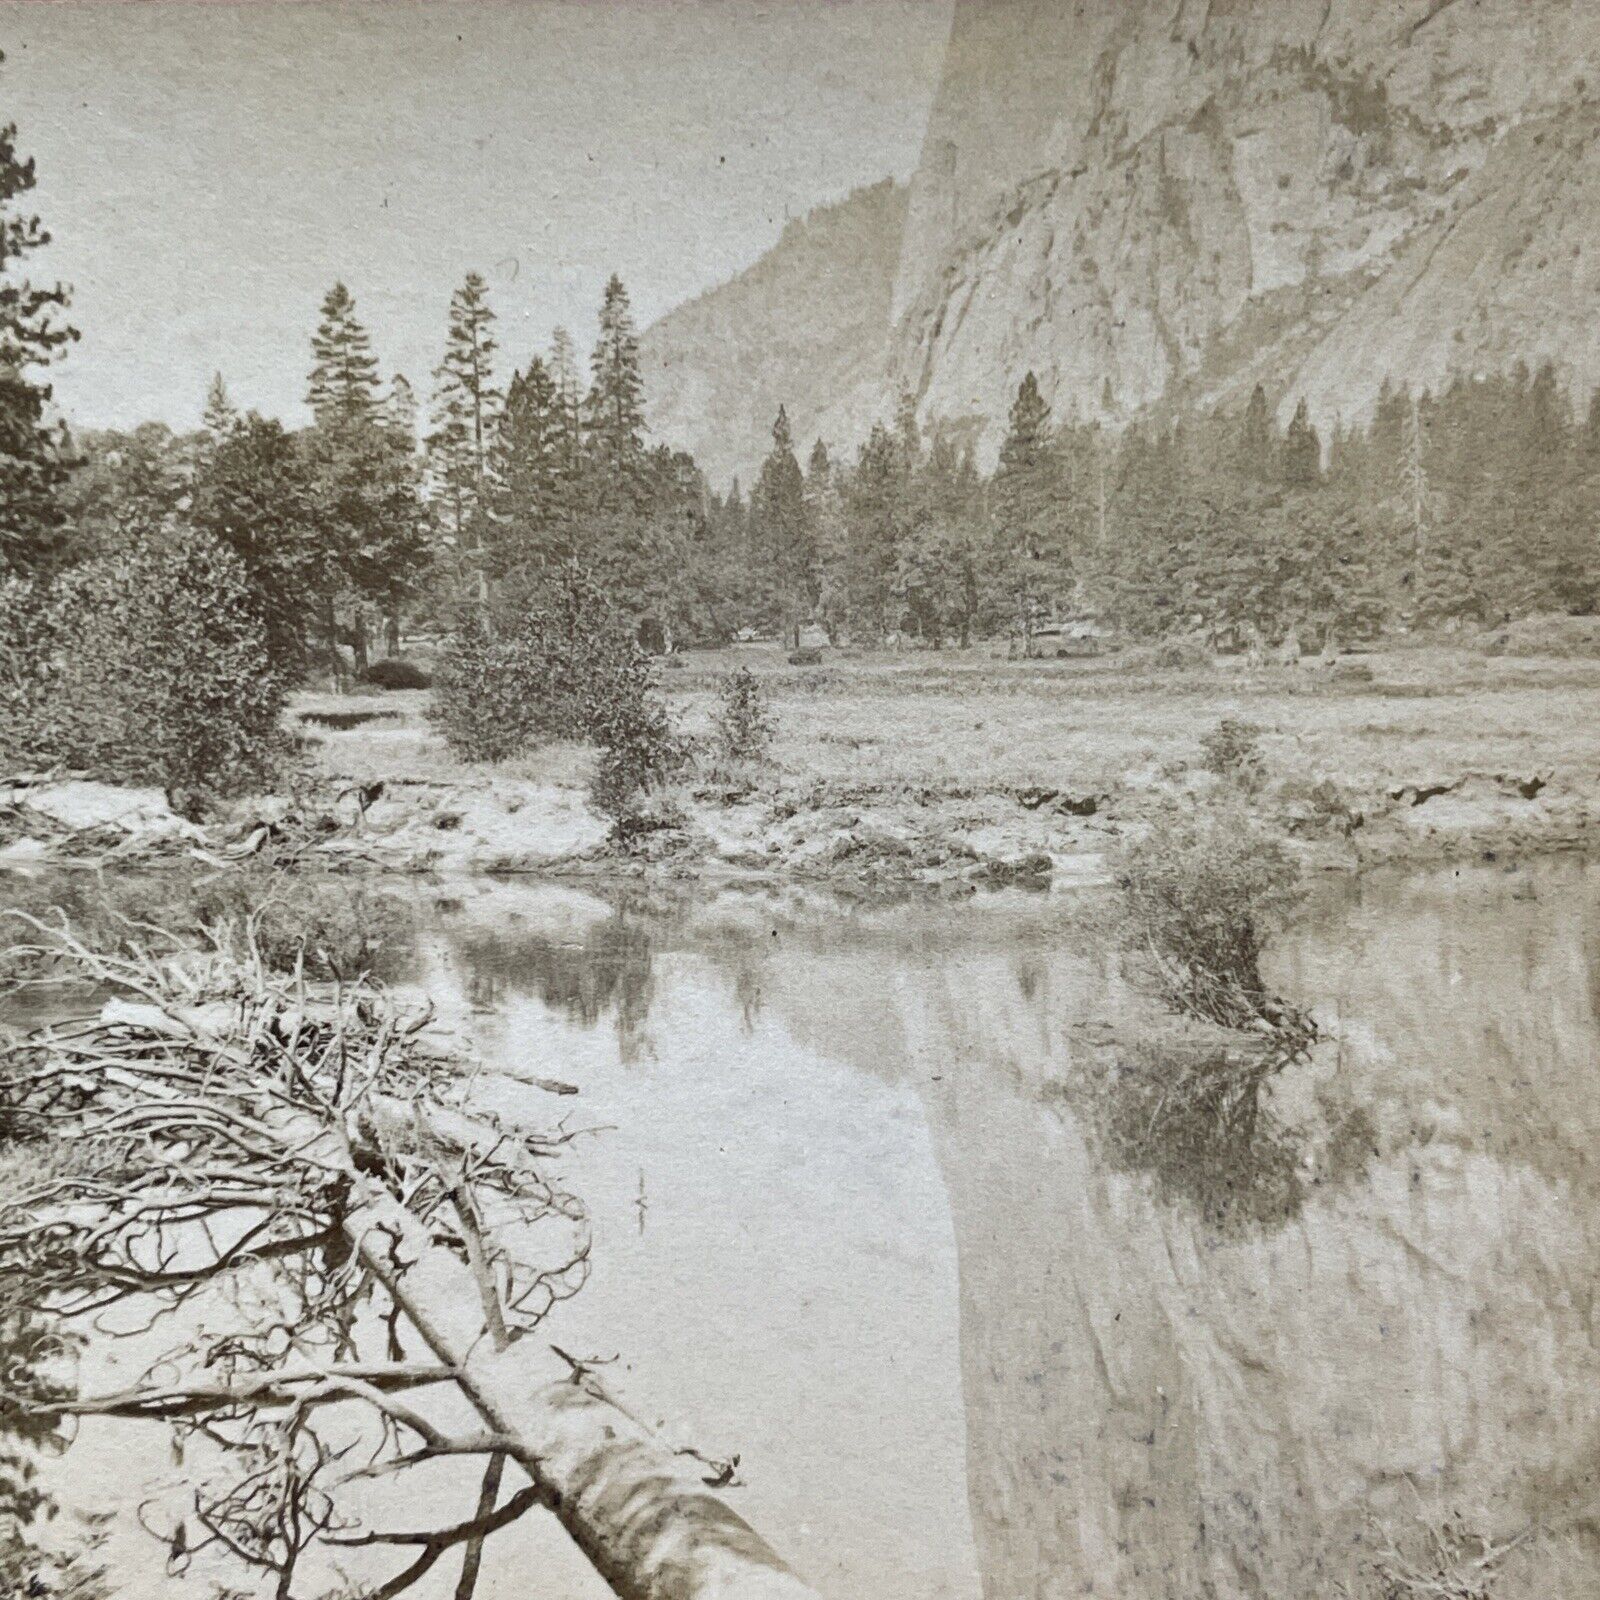 Antique 1860s El Capitan Yosemite California Stereoview Photo Card V3404